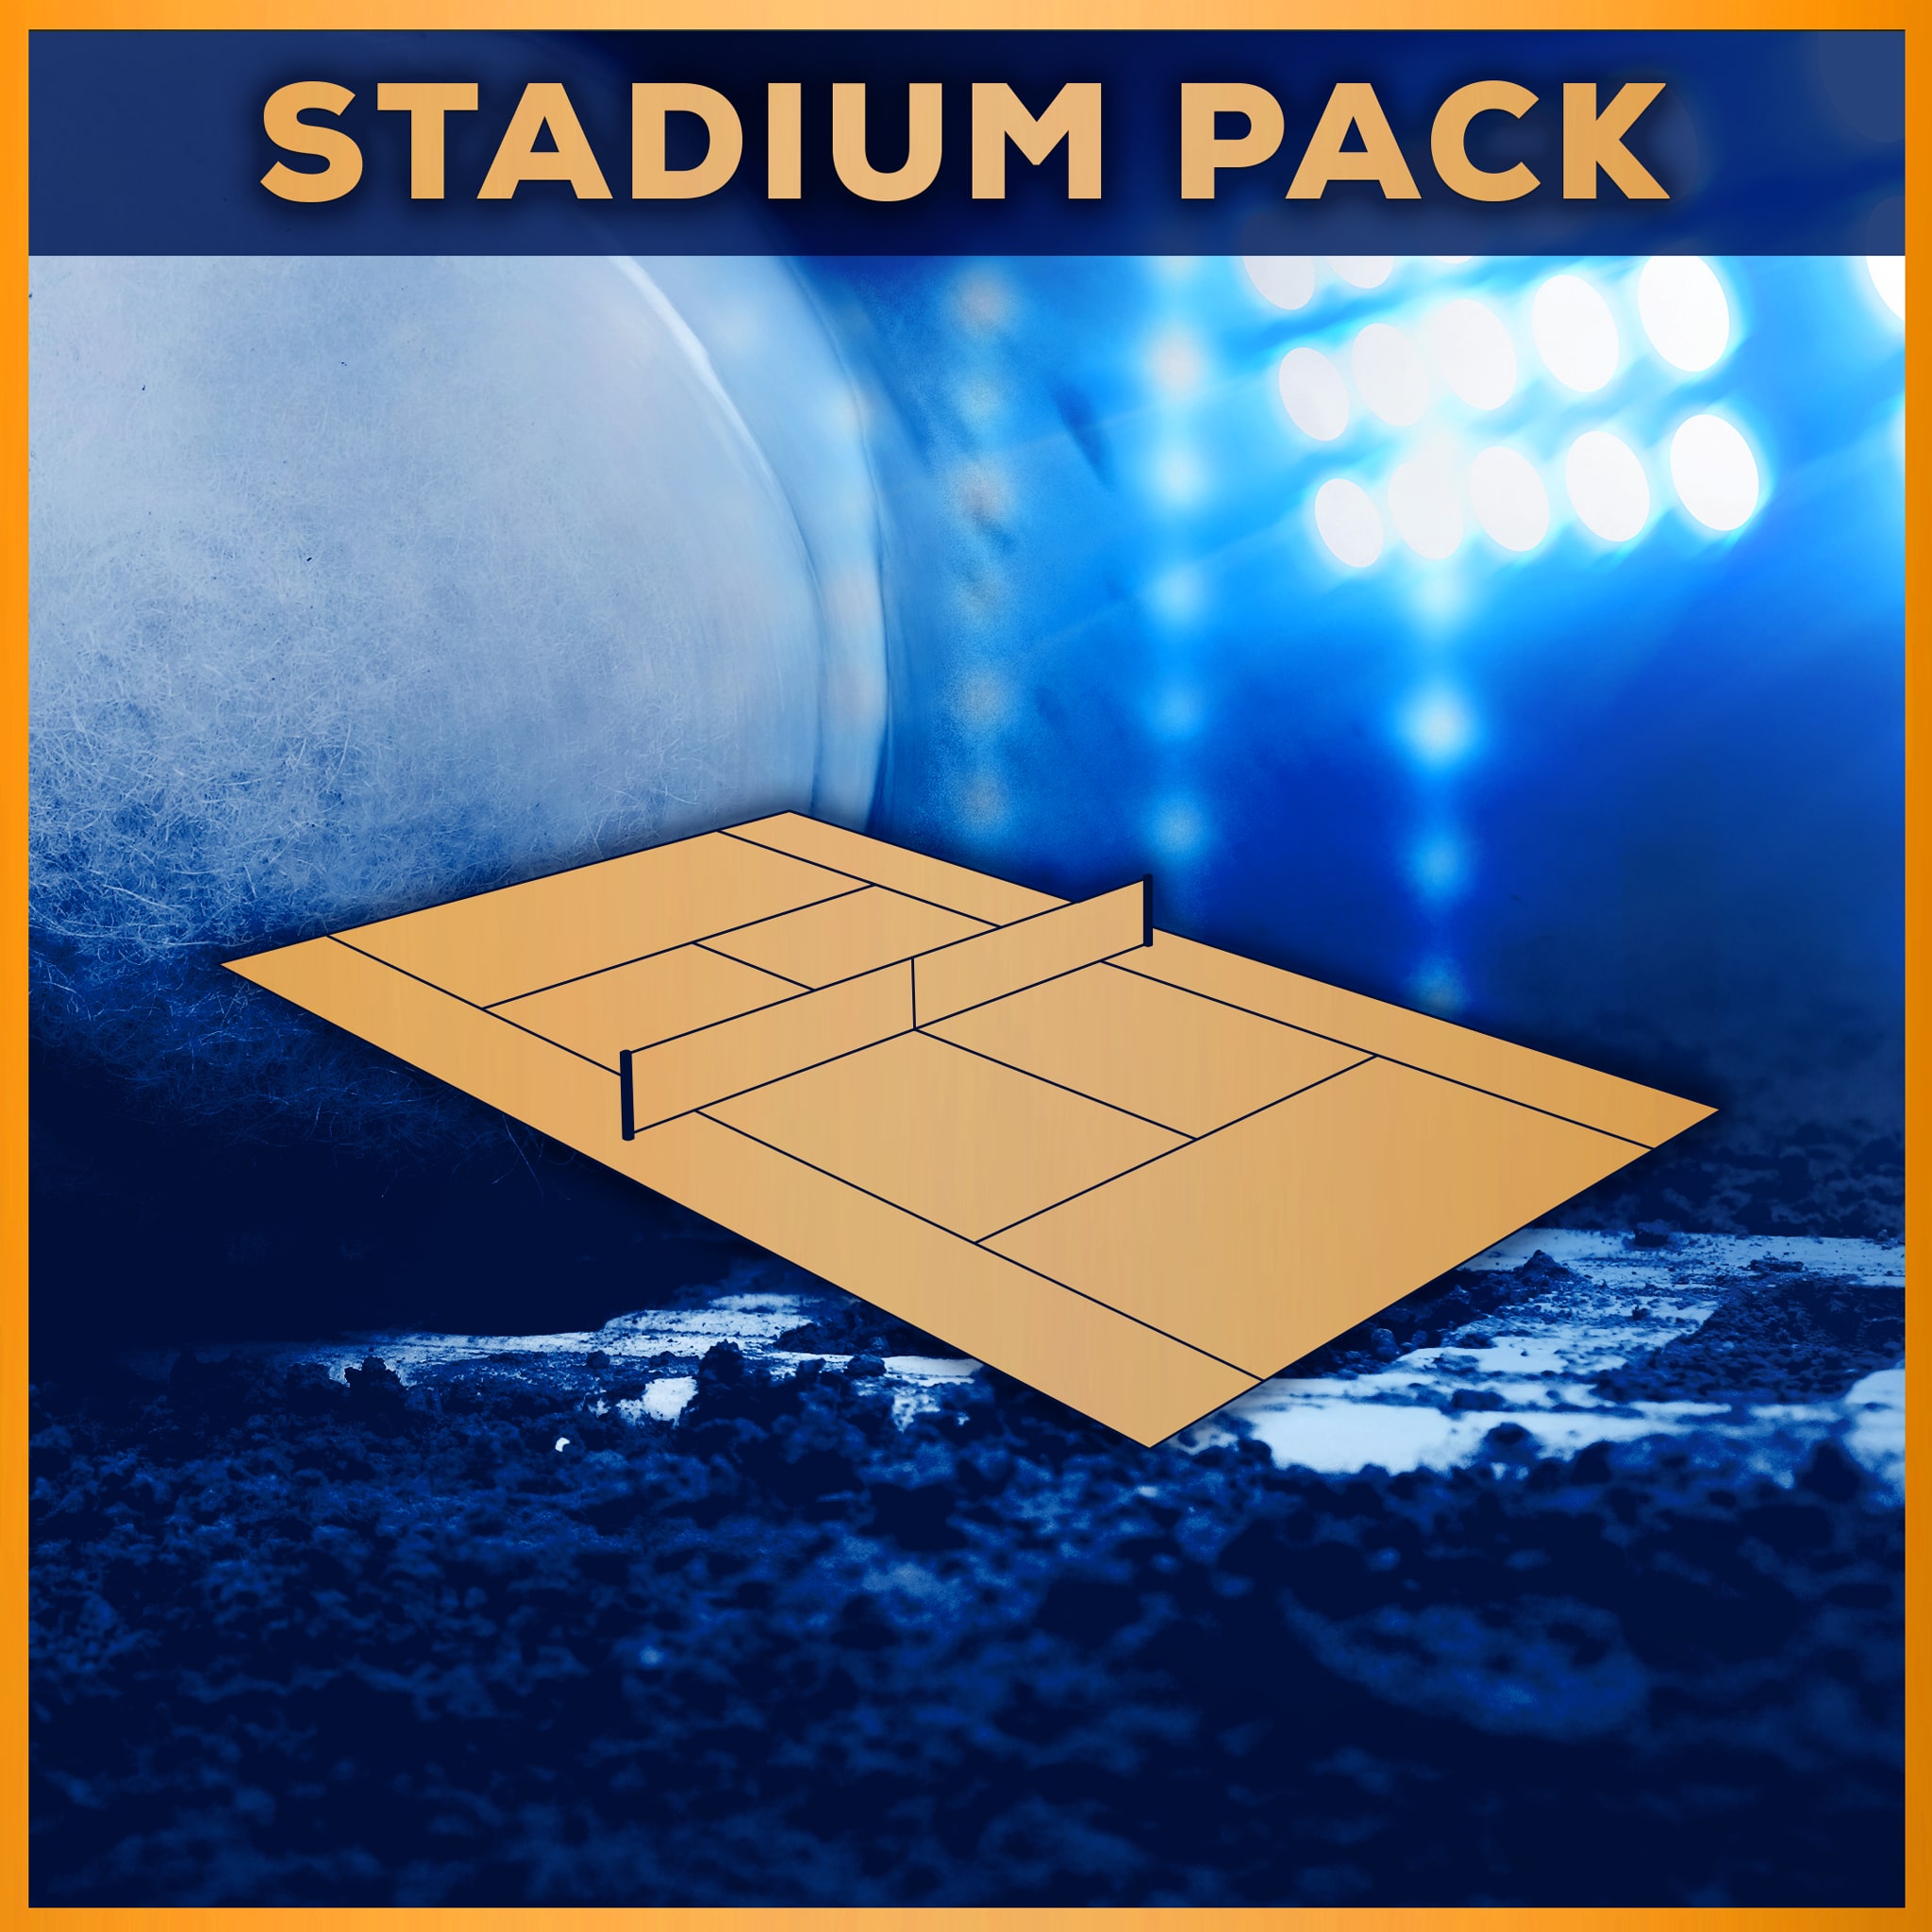 Tennis World Tour - Stadium Pack